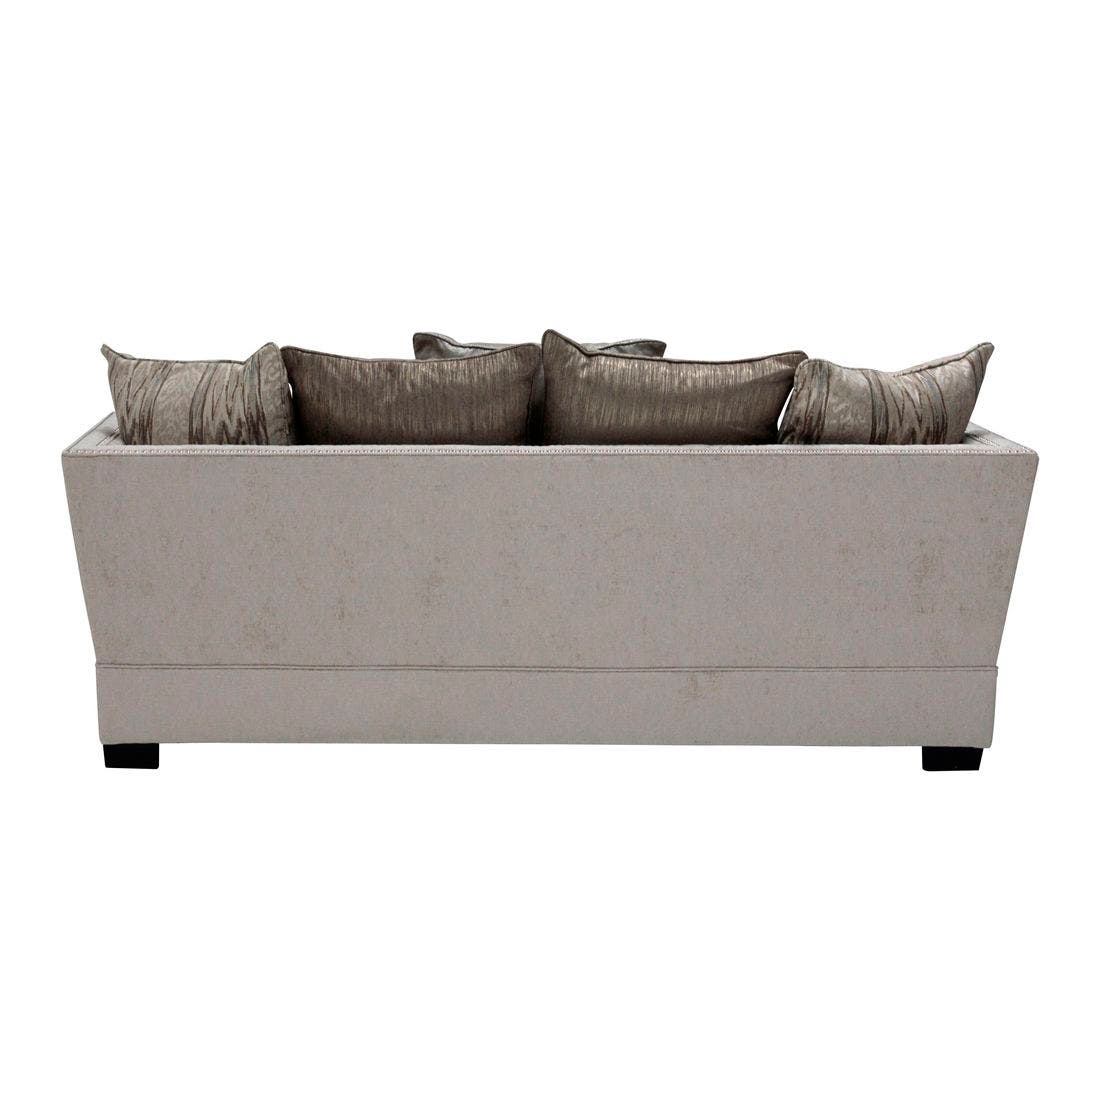 19144810-hunsai-furniture-sofa-recliner-sofas-01